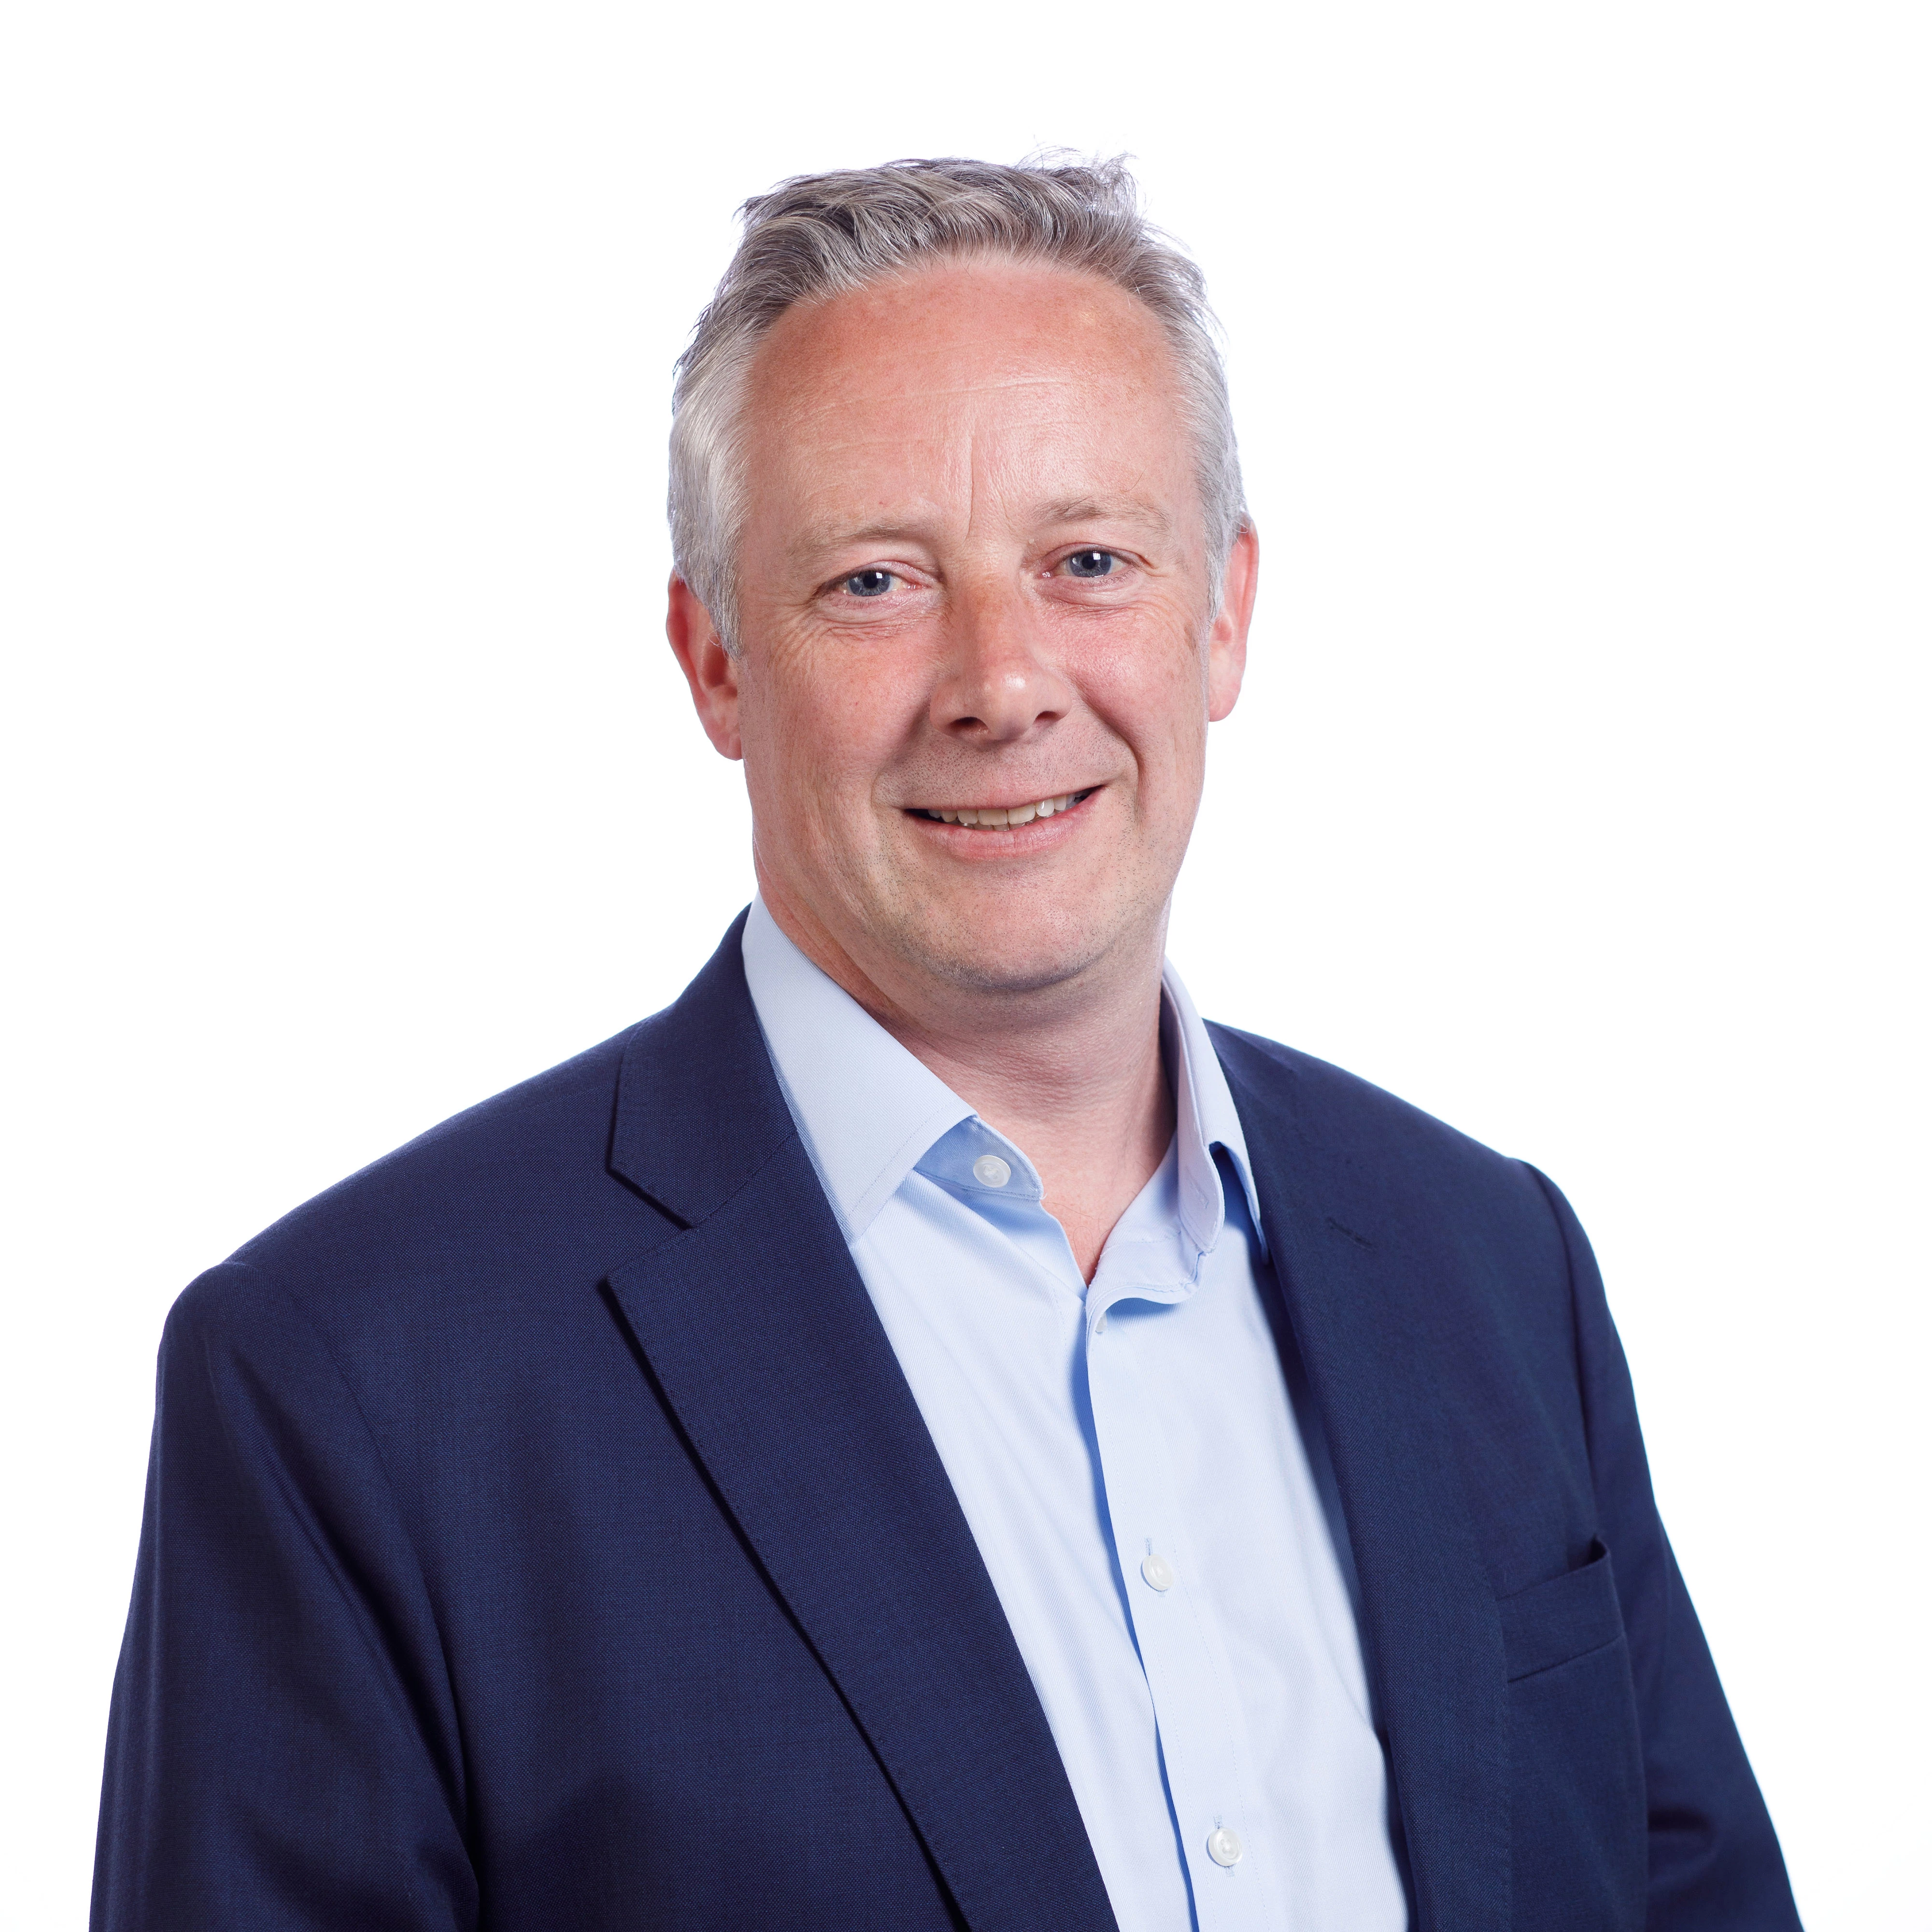 Matt Buckingham has been appointed as Grant Thornton's new head of commercial audit in Birmingham